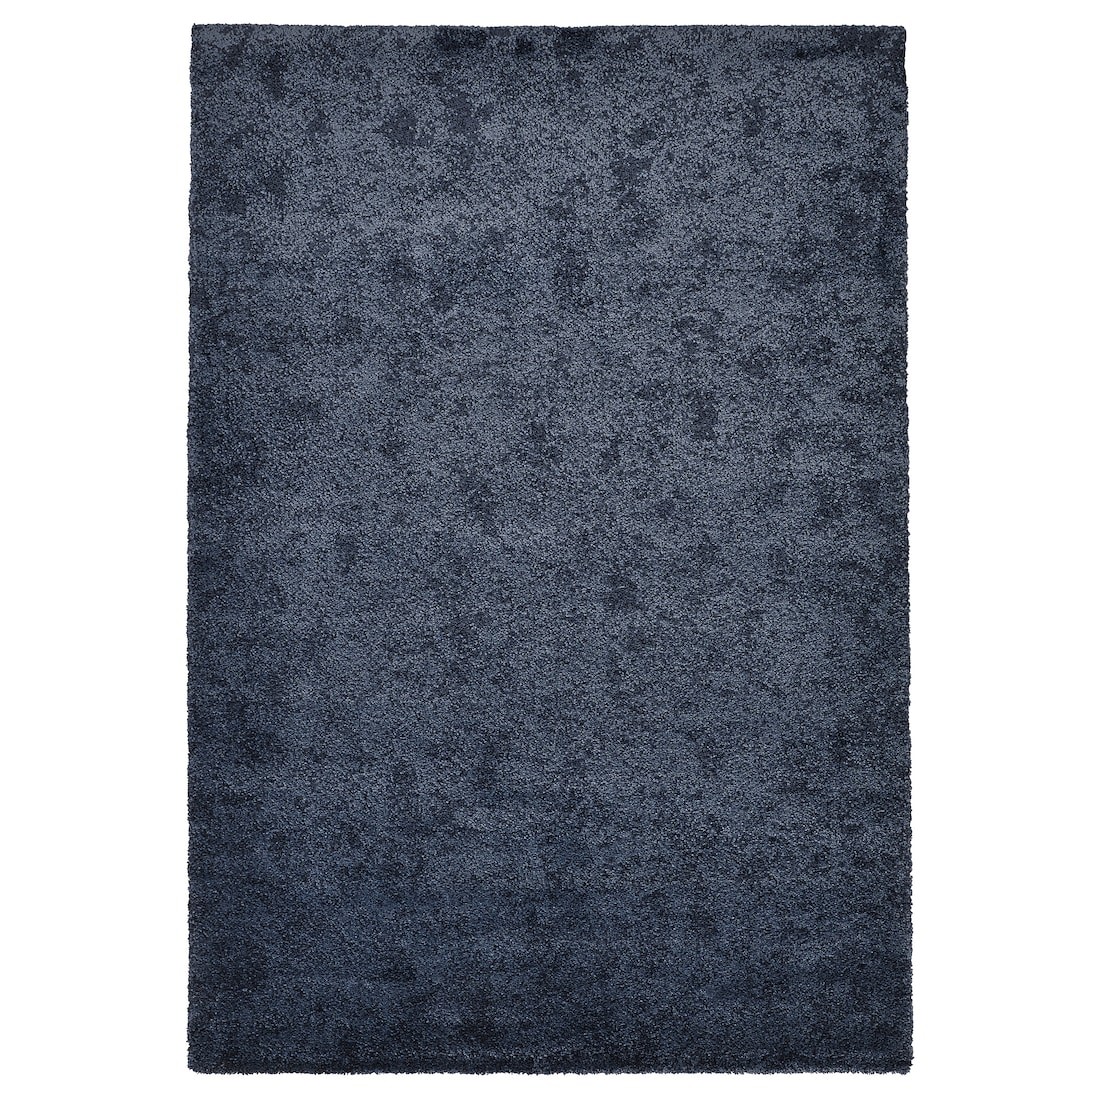 STOENSE Ковер с коротким ворсом, темно-синий, 200x300 см